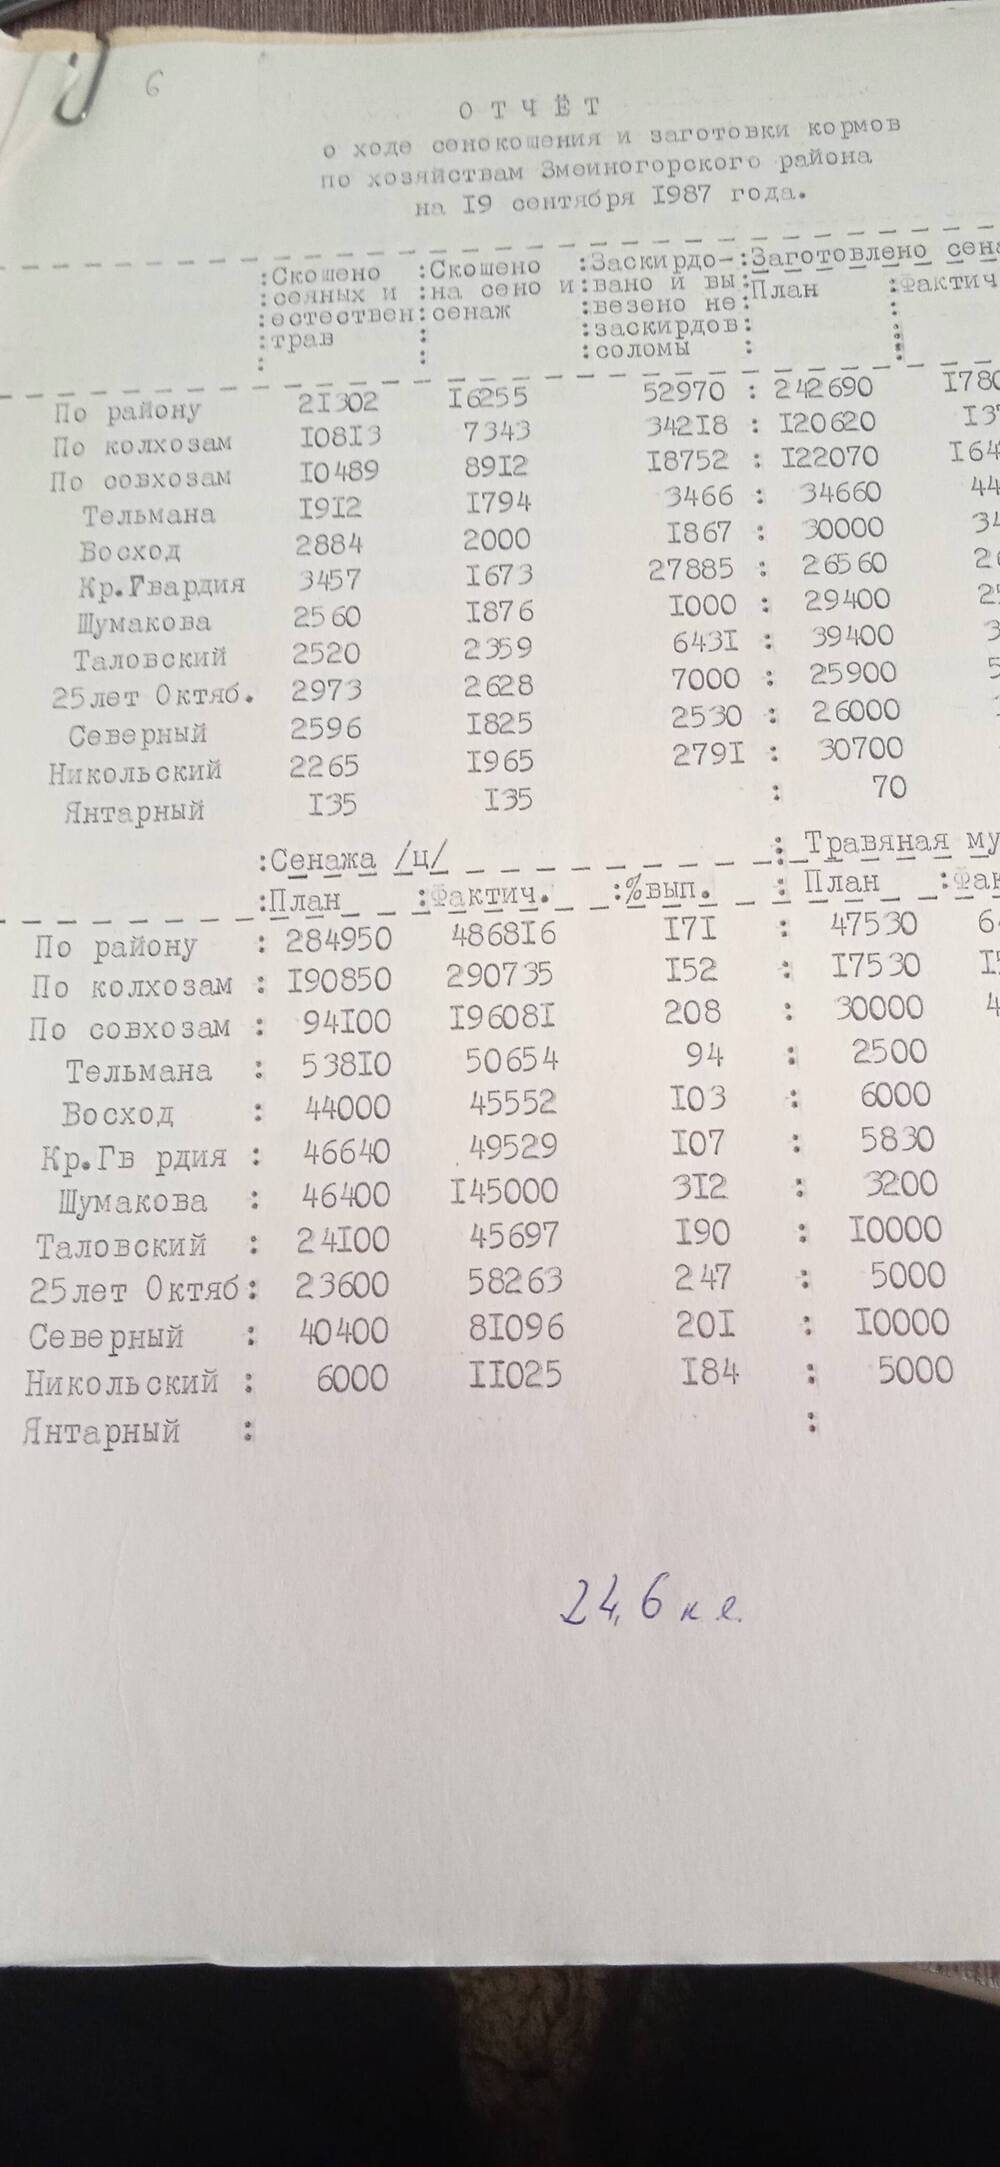 Отчёт о ходе сенокошения и заготовки кормов по хозяйствам Змеиногорского района на 19 сентября 1987 года